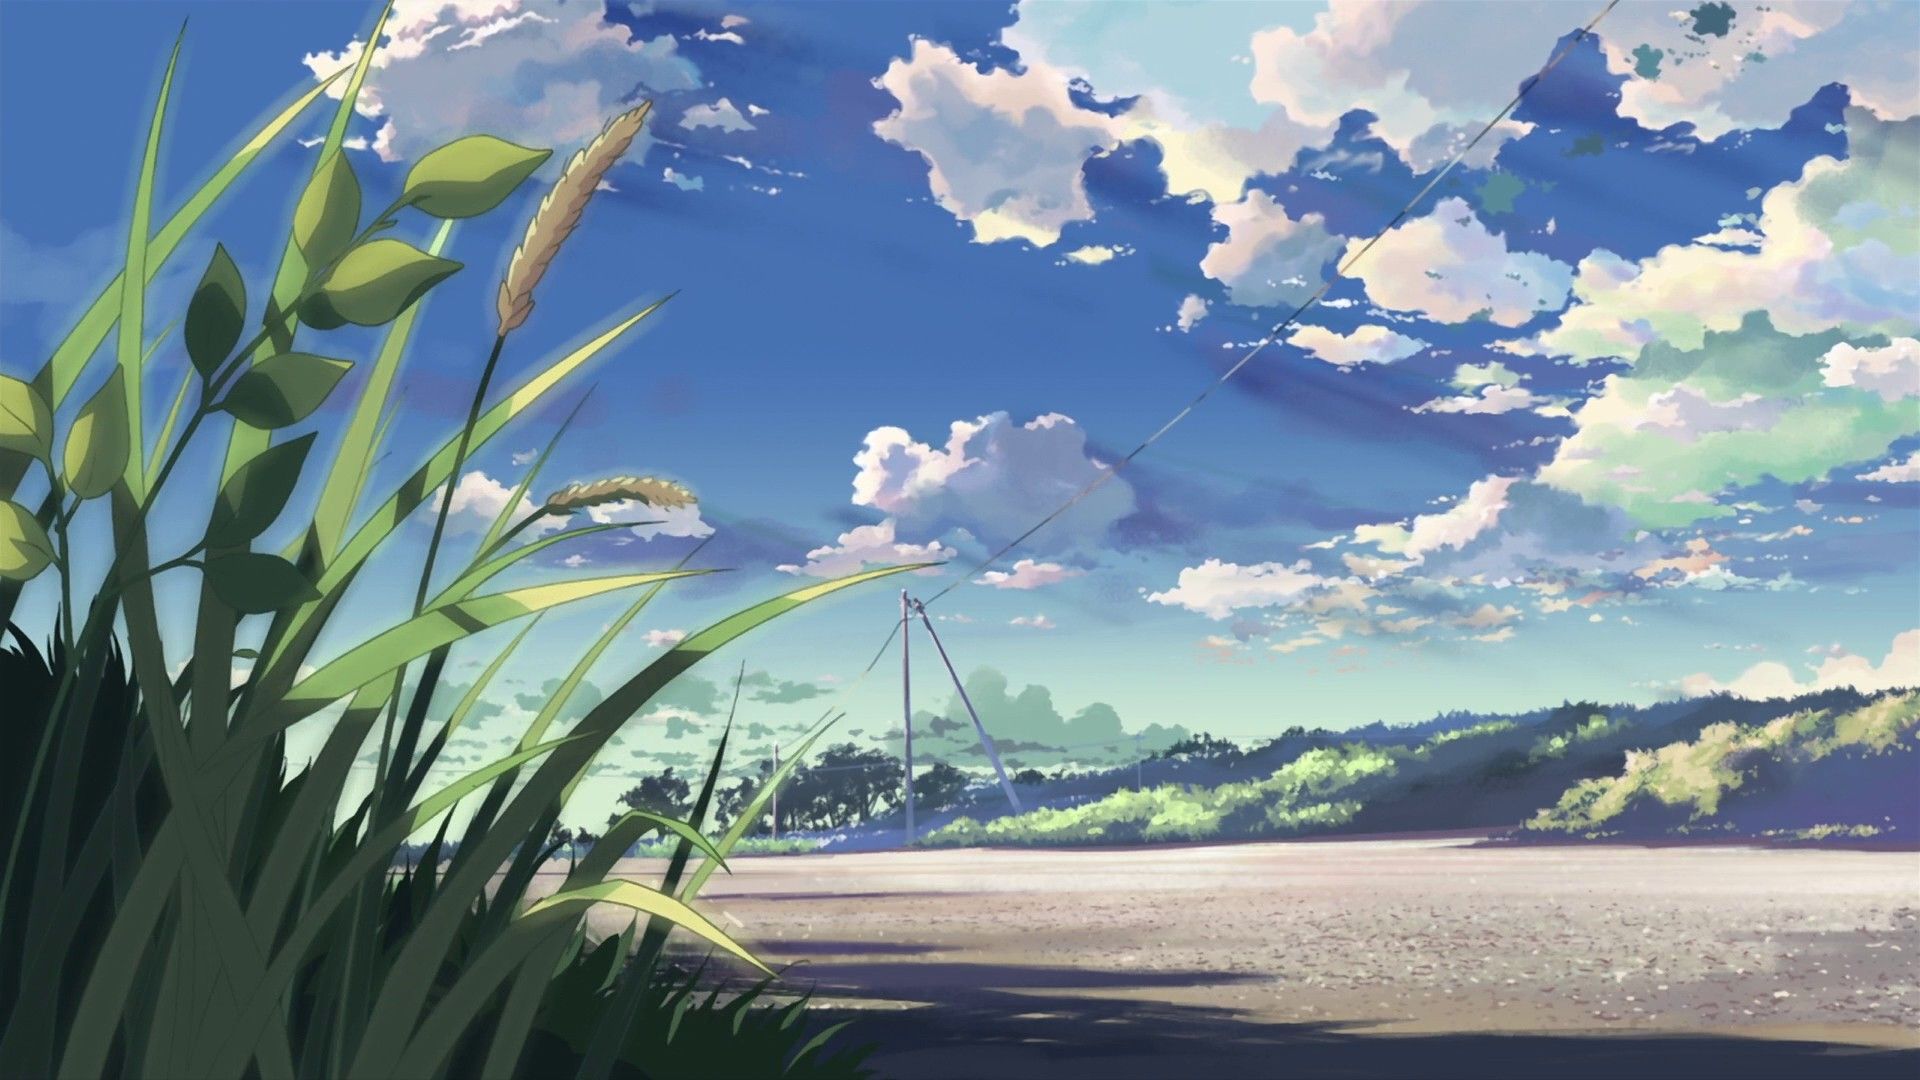 Anime Scenery wallpaper Download